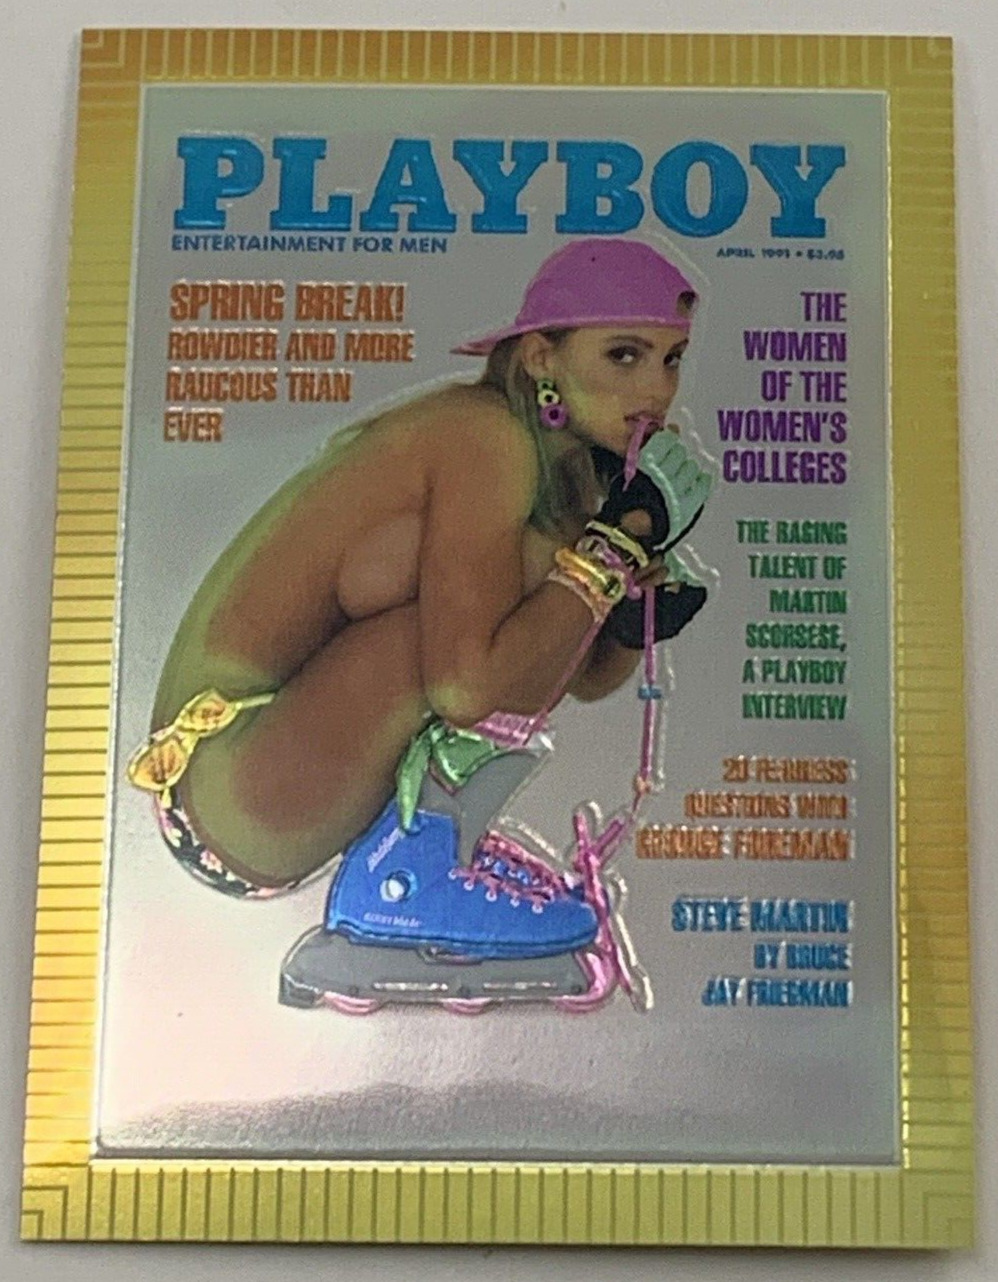 Playboy Chromium Cover Card - Julie Clarke -  APR 1991 - #295 - RARE